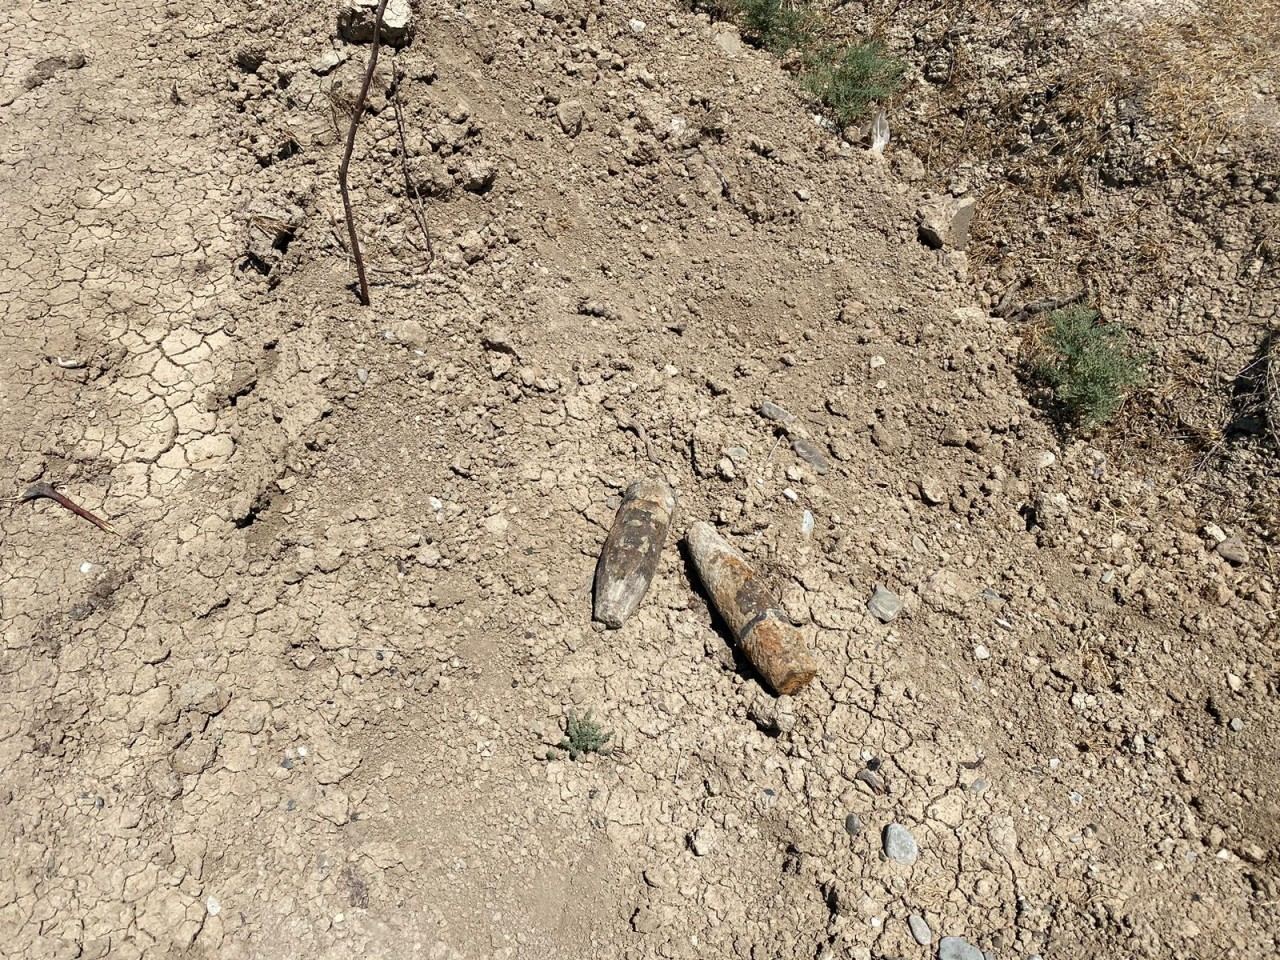 Ammunition found in Azerbaijan’s Sumgayit city (PHOTO/VIDEO)